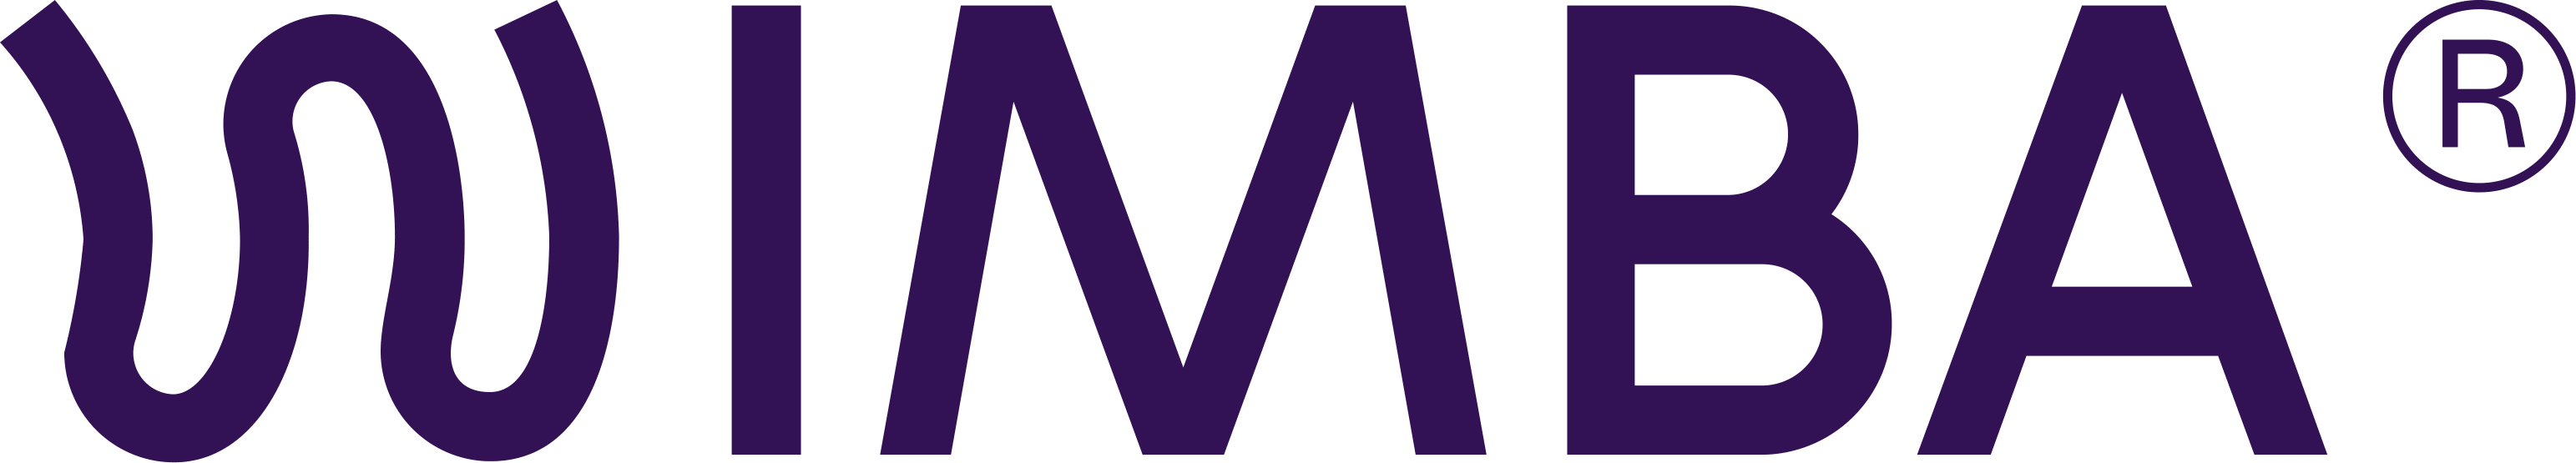 Wimba logo